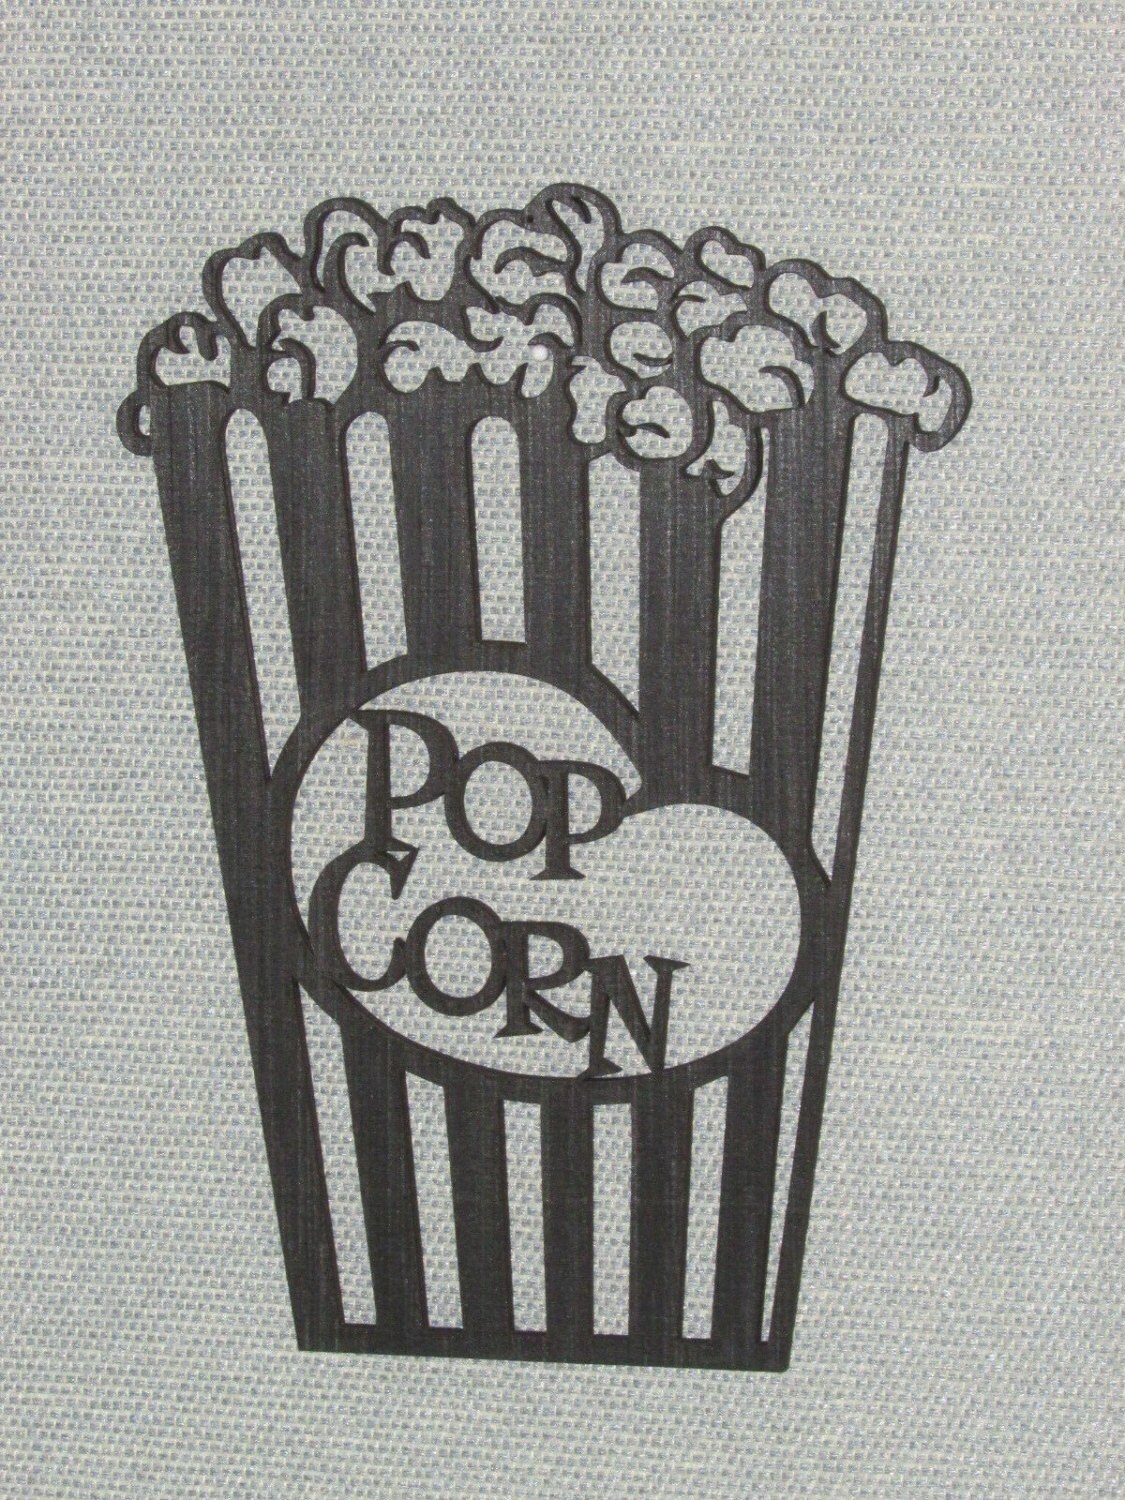 POPCORN Movie Sign Home Theater Wall Decor Sign Cinema Free